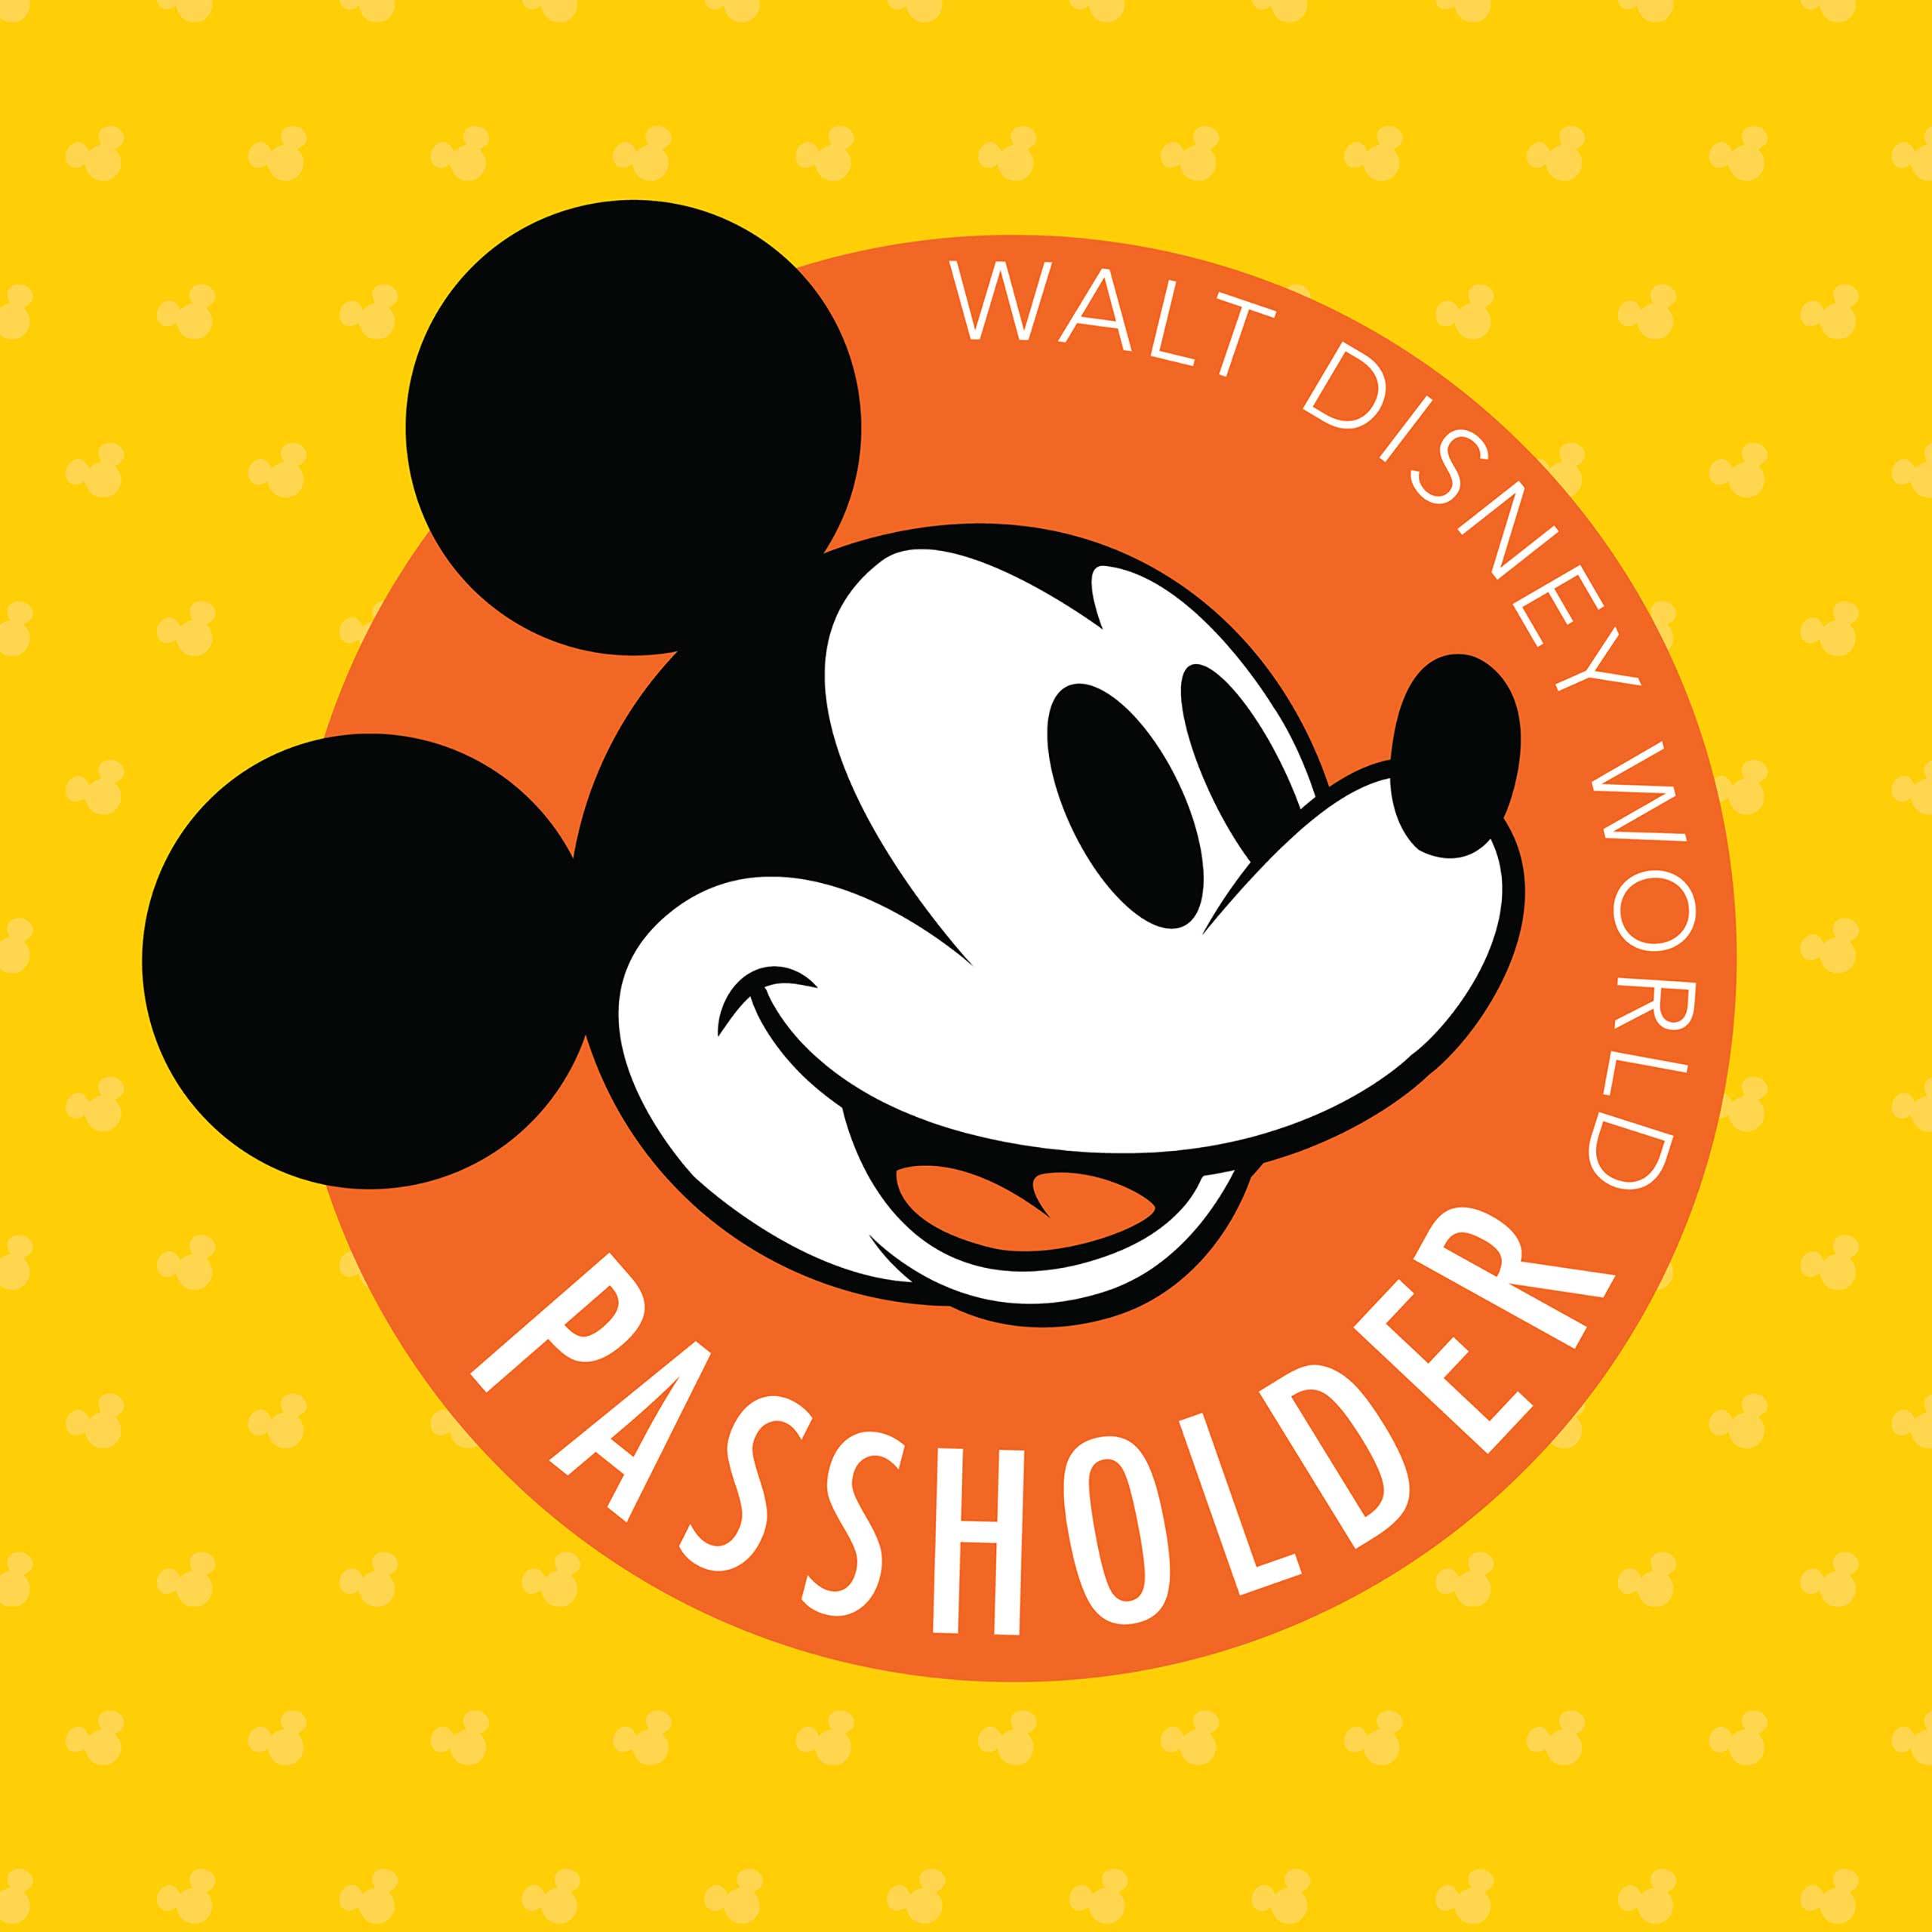 Disney now offers dedicated support for passholders as part of its new V.I.PASSHOLDER program